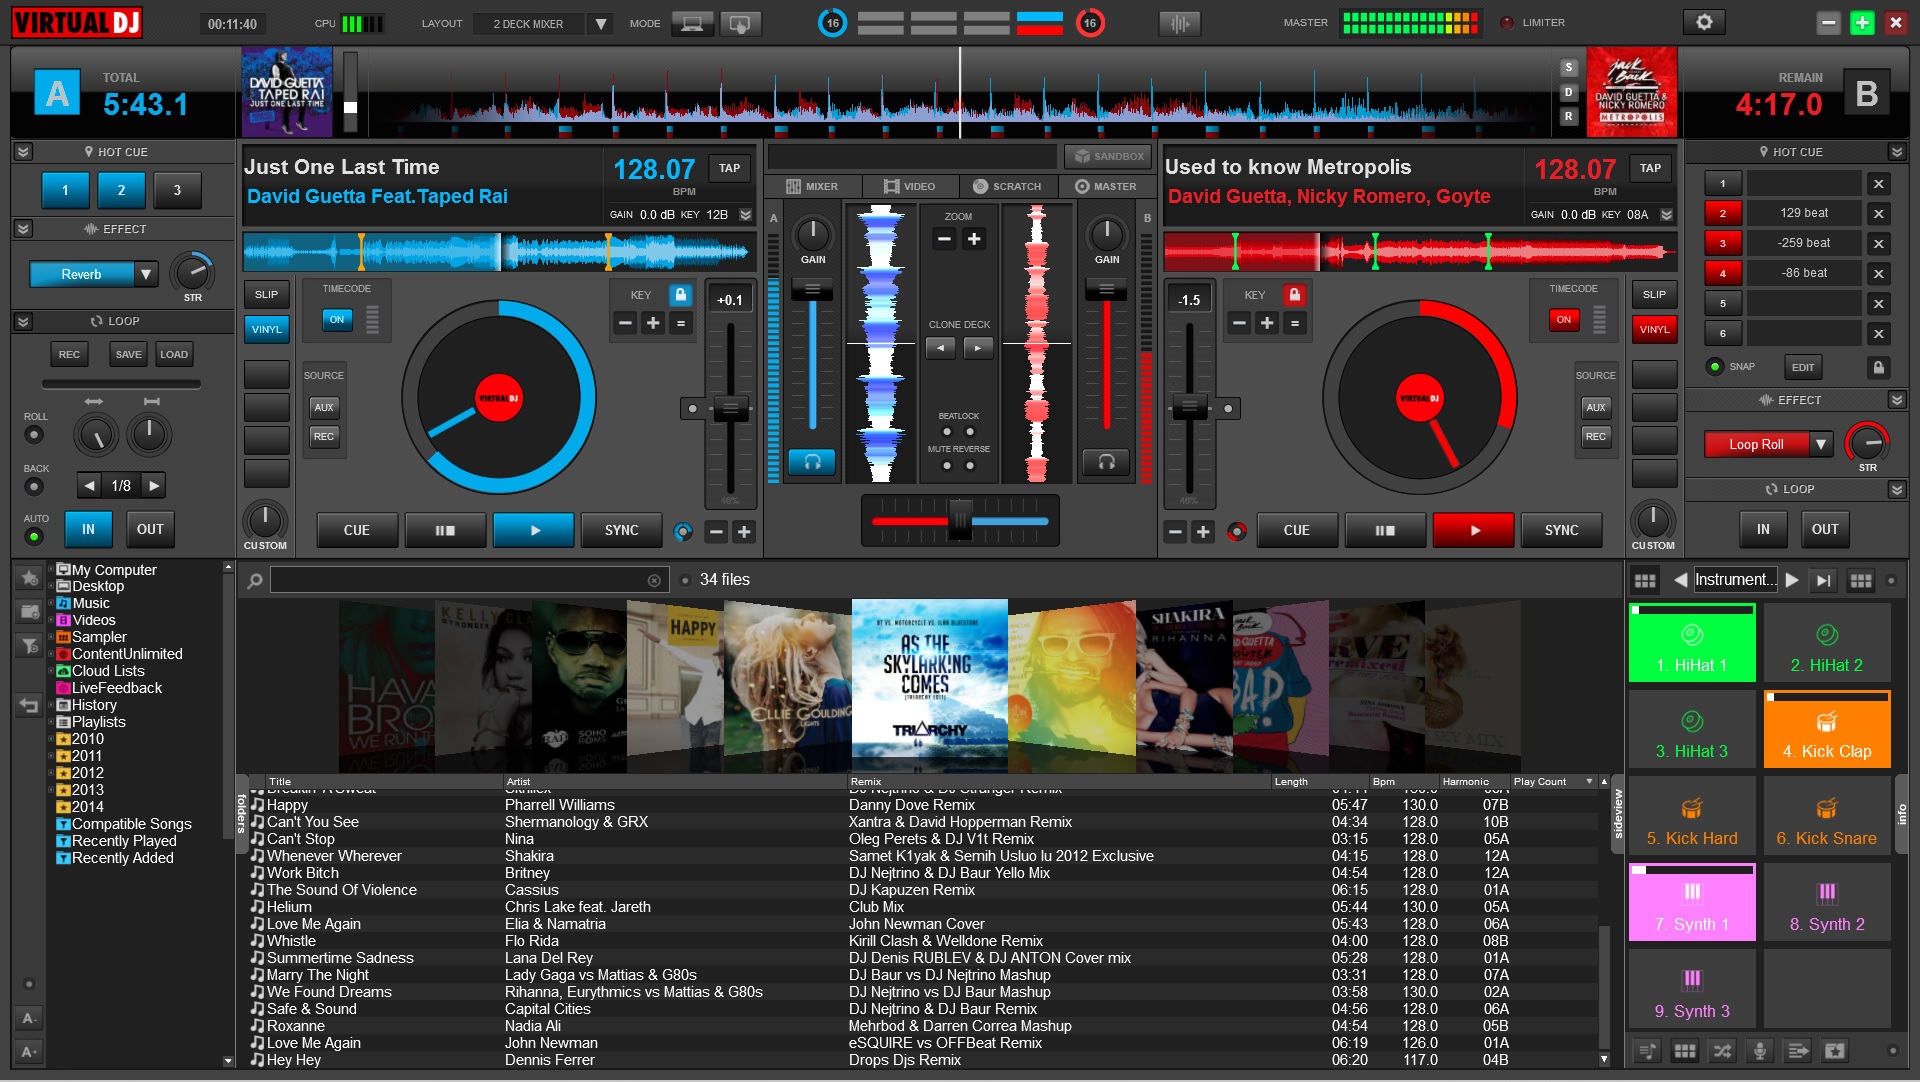 virtual dj mixer free download for windows 8